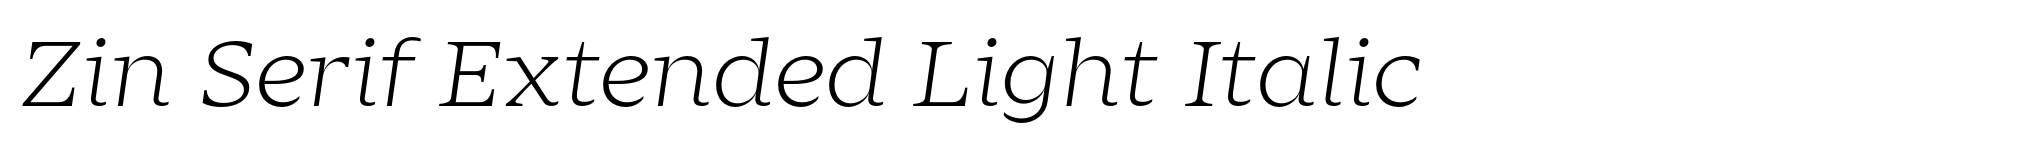 Zin Serif Extended Light Italic image